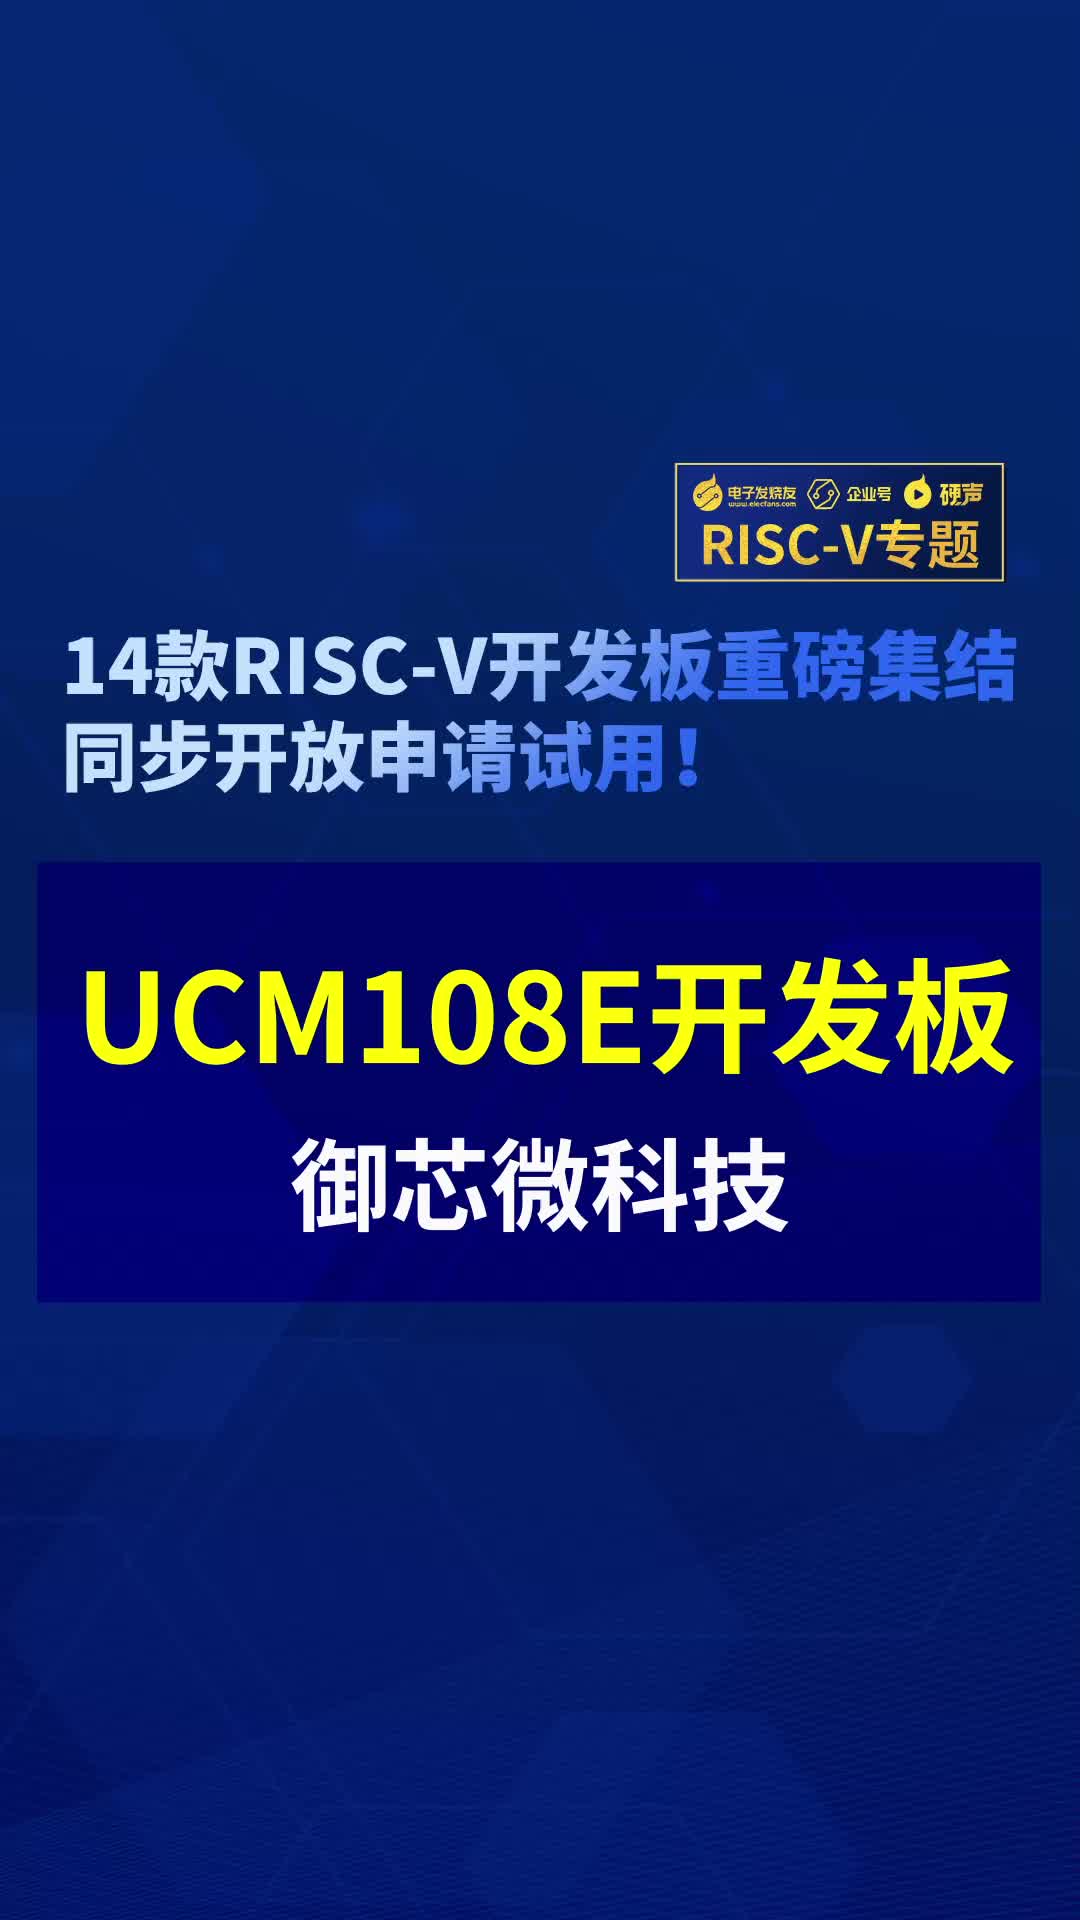 【RISC-V專題】御芯微UCM108E開發板首發試用#RISC-V開發板評測 